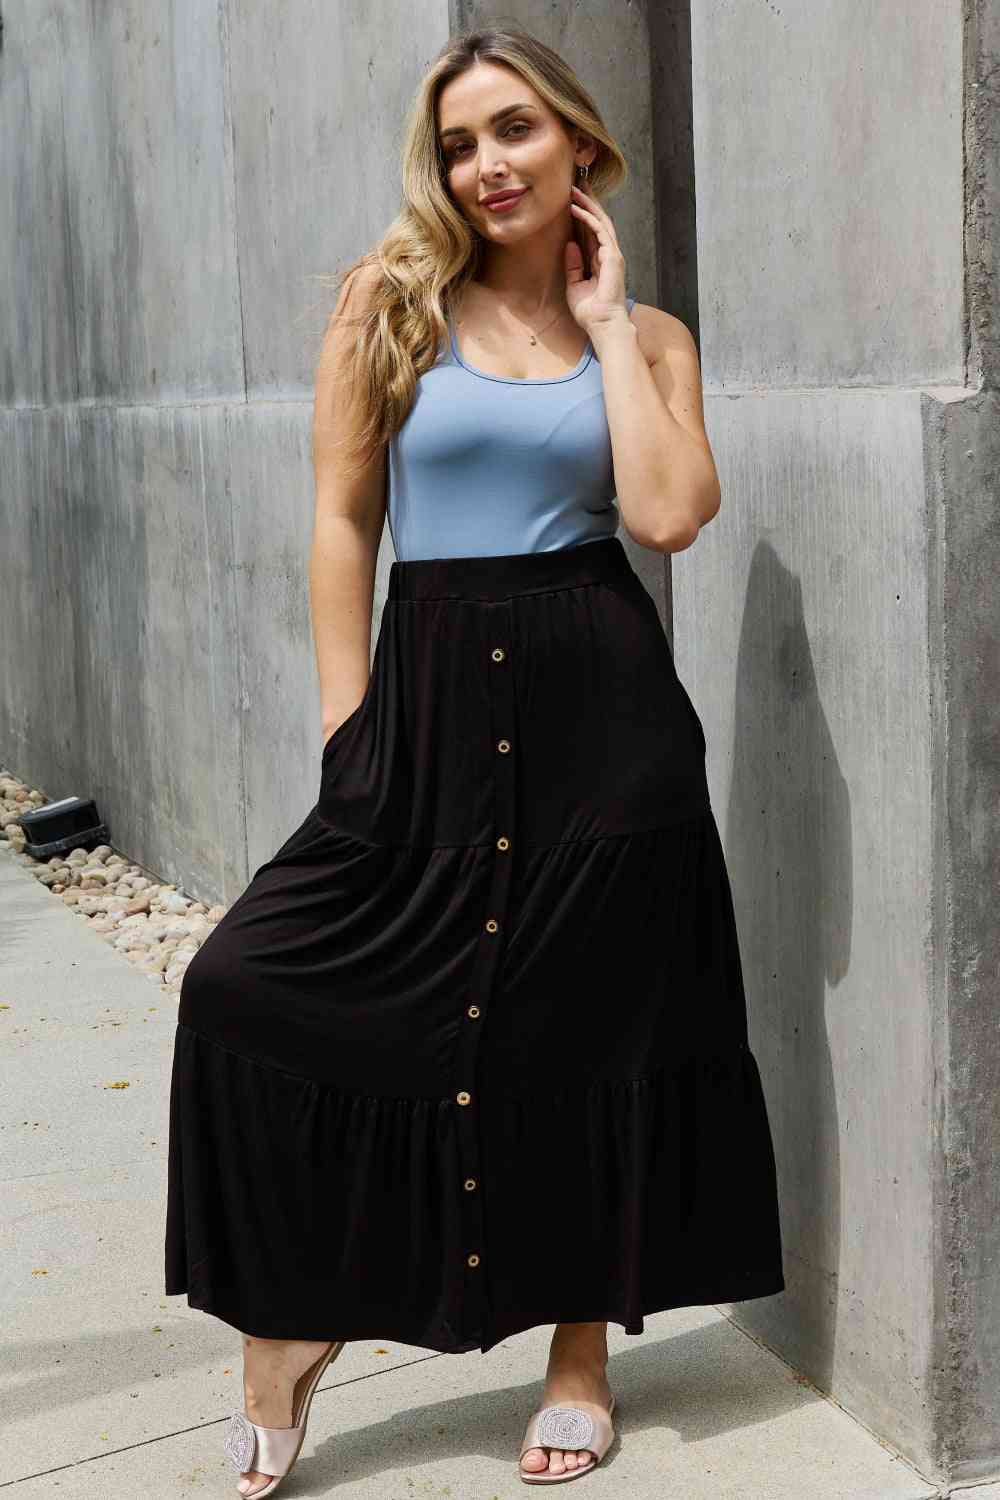 Solid Black Maxi Skirt